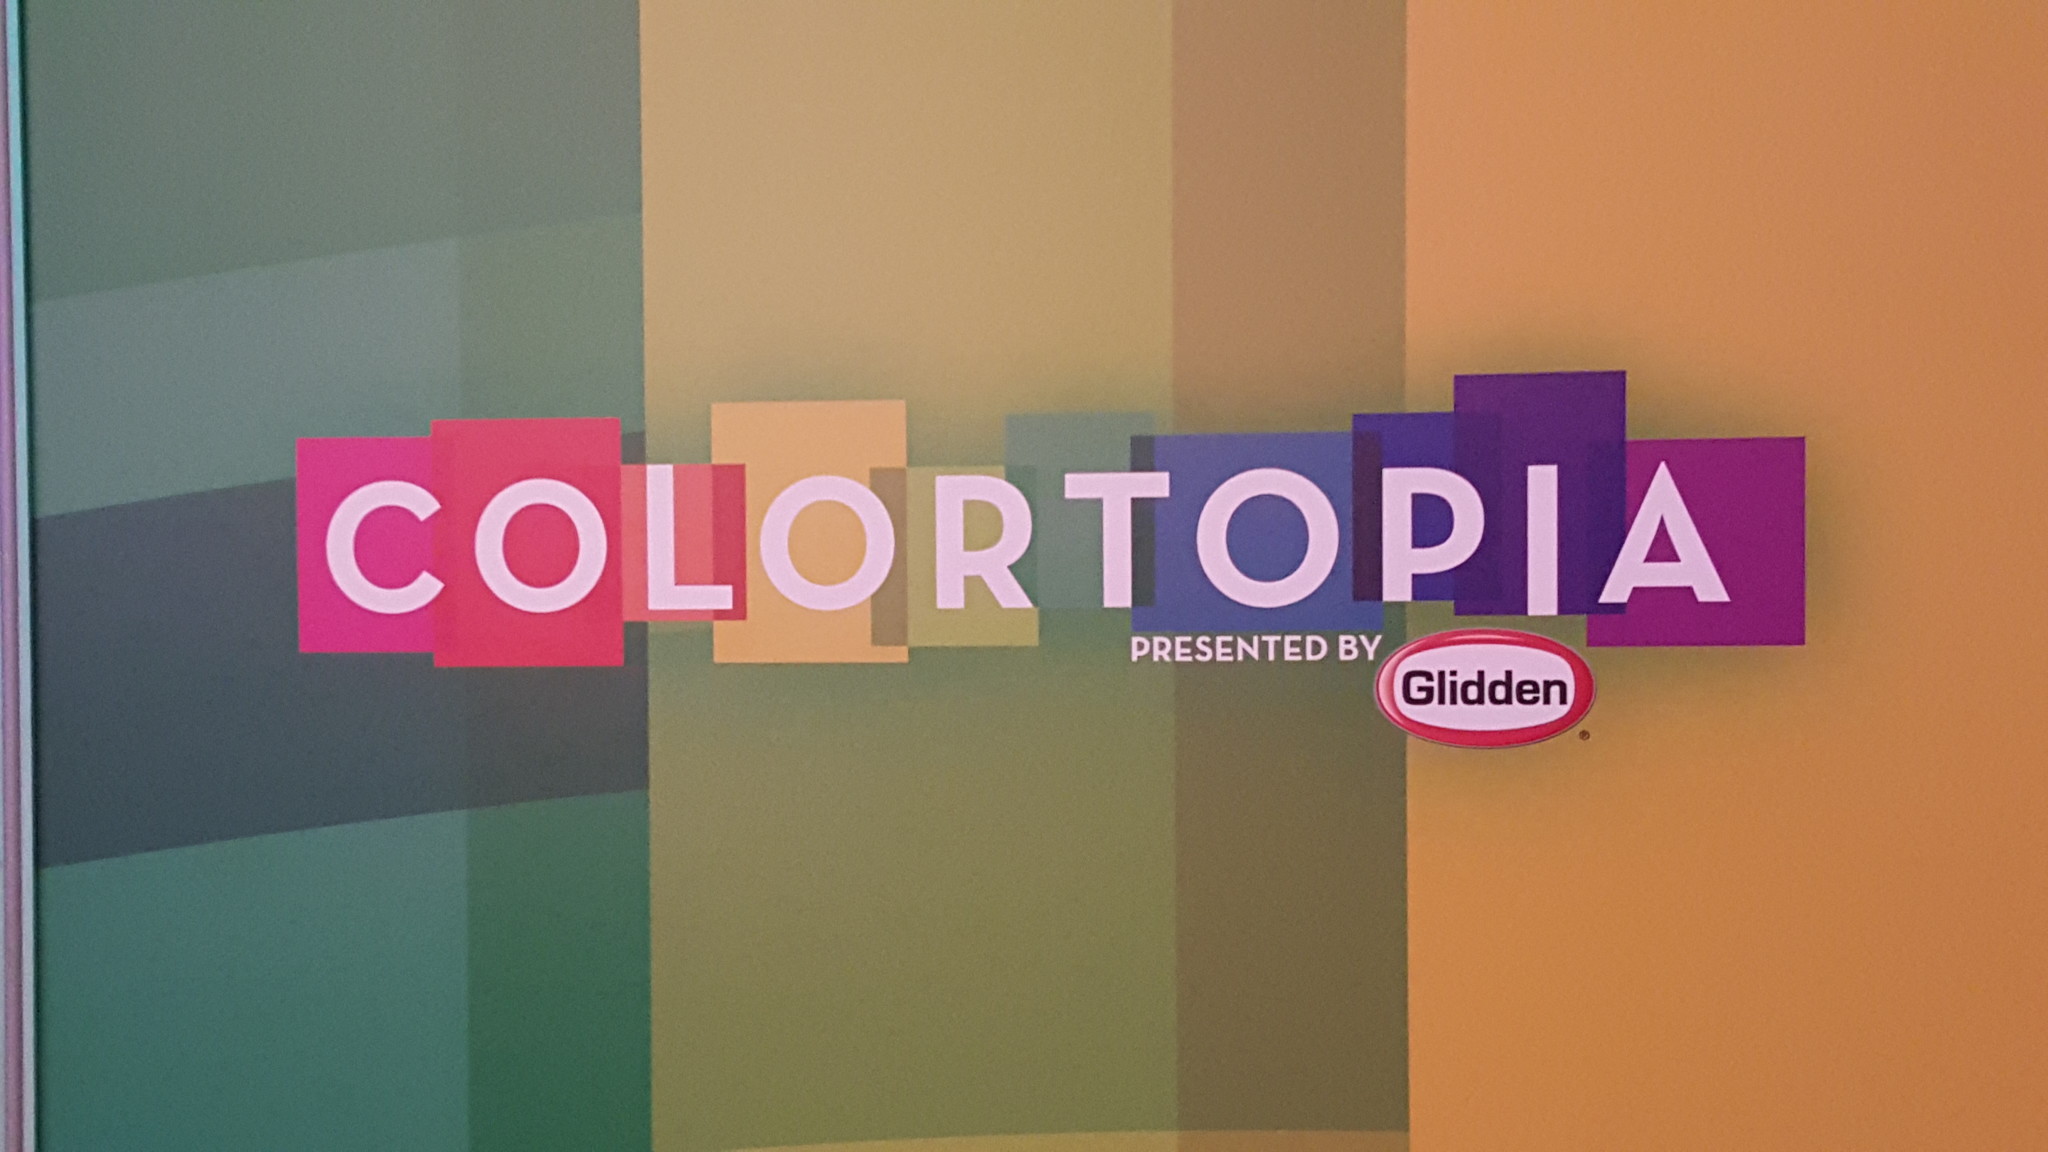 Glidden’s Colortopia opens tomorrow in Epcot’s Innoventions East.